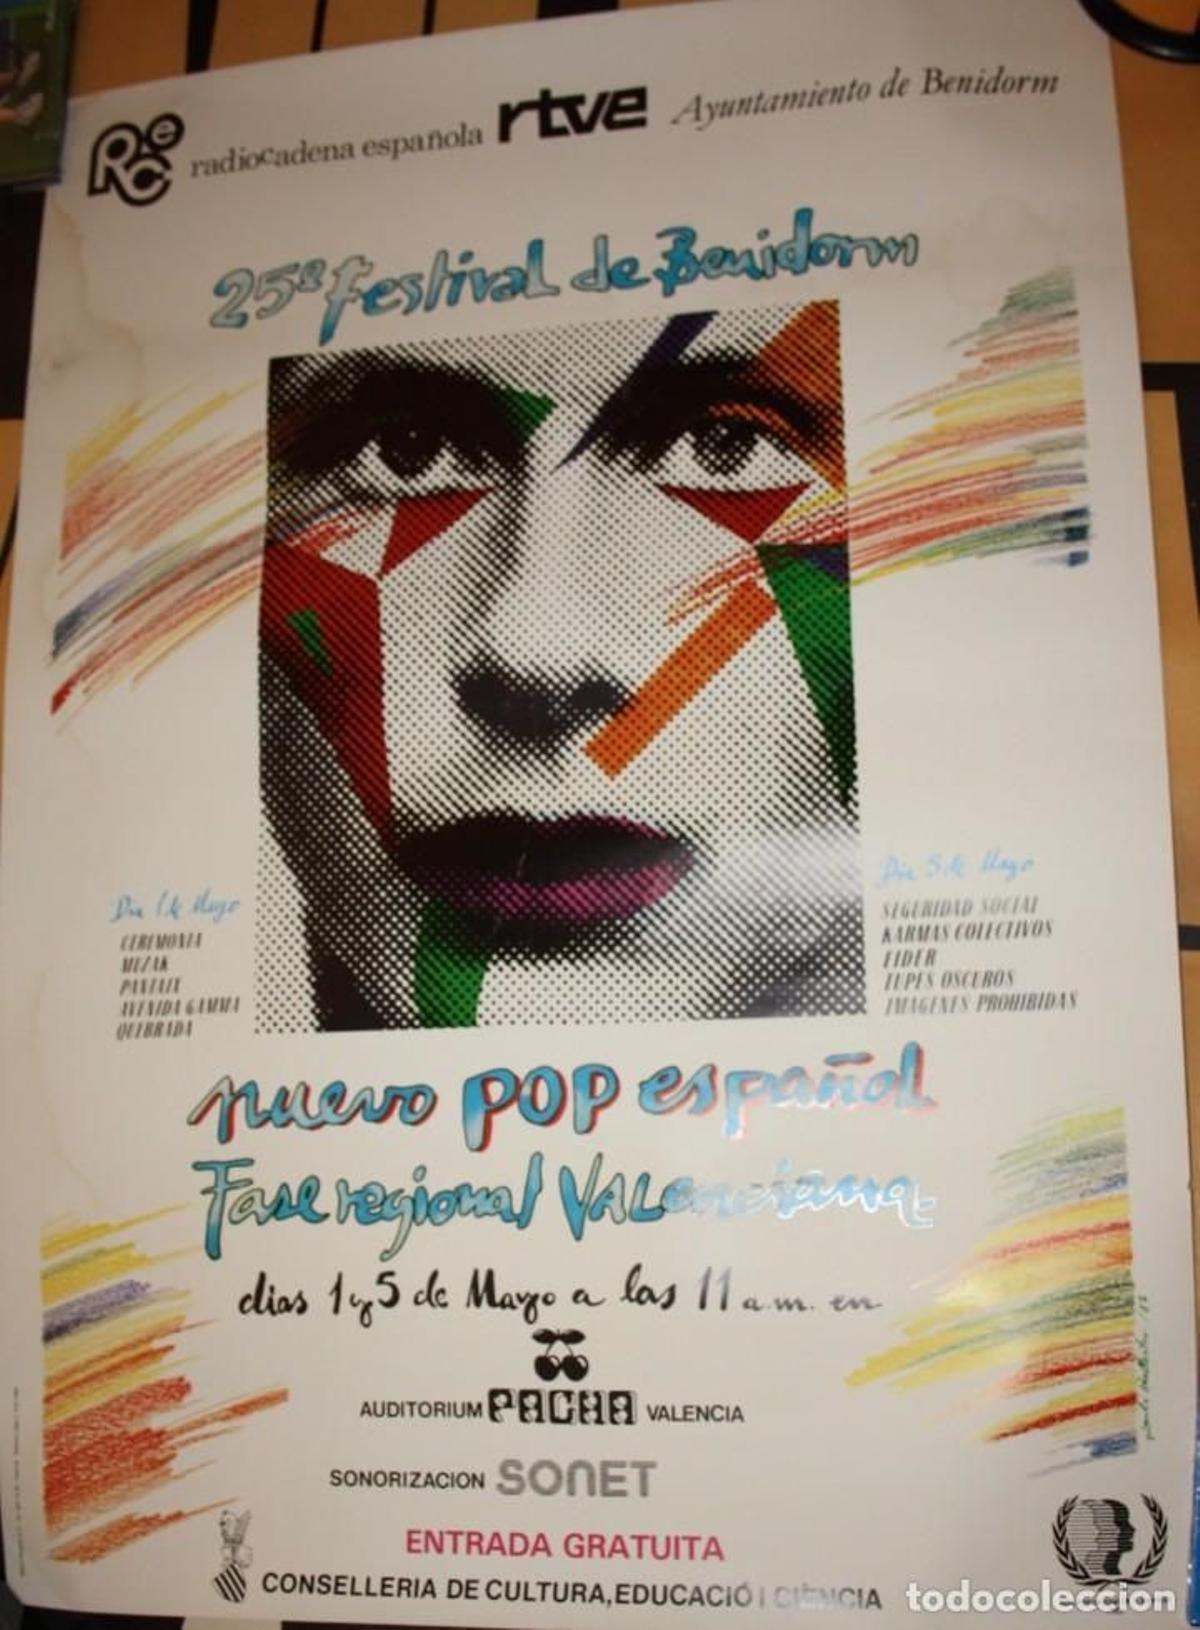 Cartel de la final valenciana del 25 Festival de Benidorm